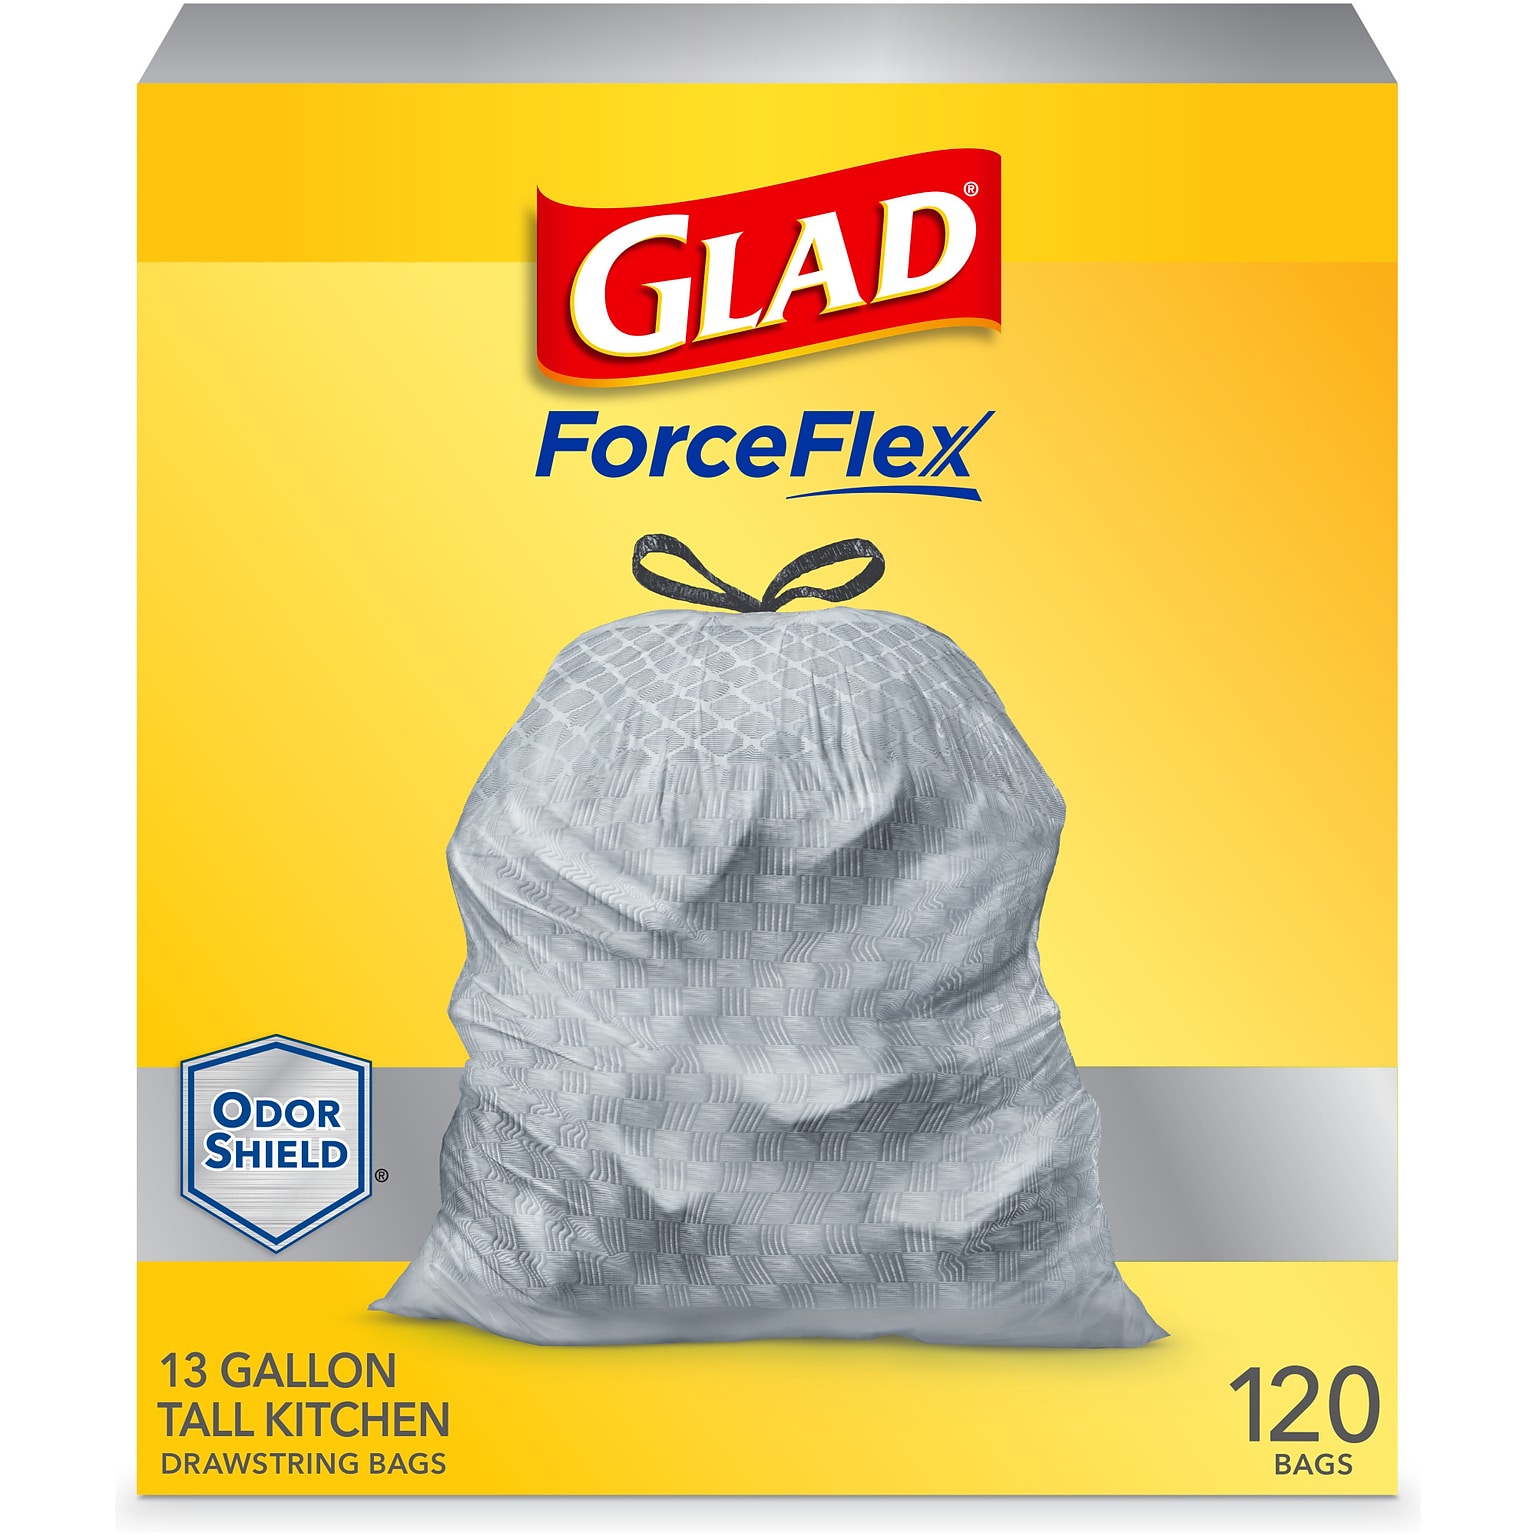 Glad ForceFlex OdorShield 13 Gallon Kitchen Trash Bag, 23.75 x 25.4, Low Density, 0.72 mil, Gray, 120 Bags/Box (79158)